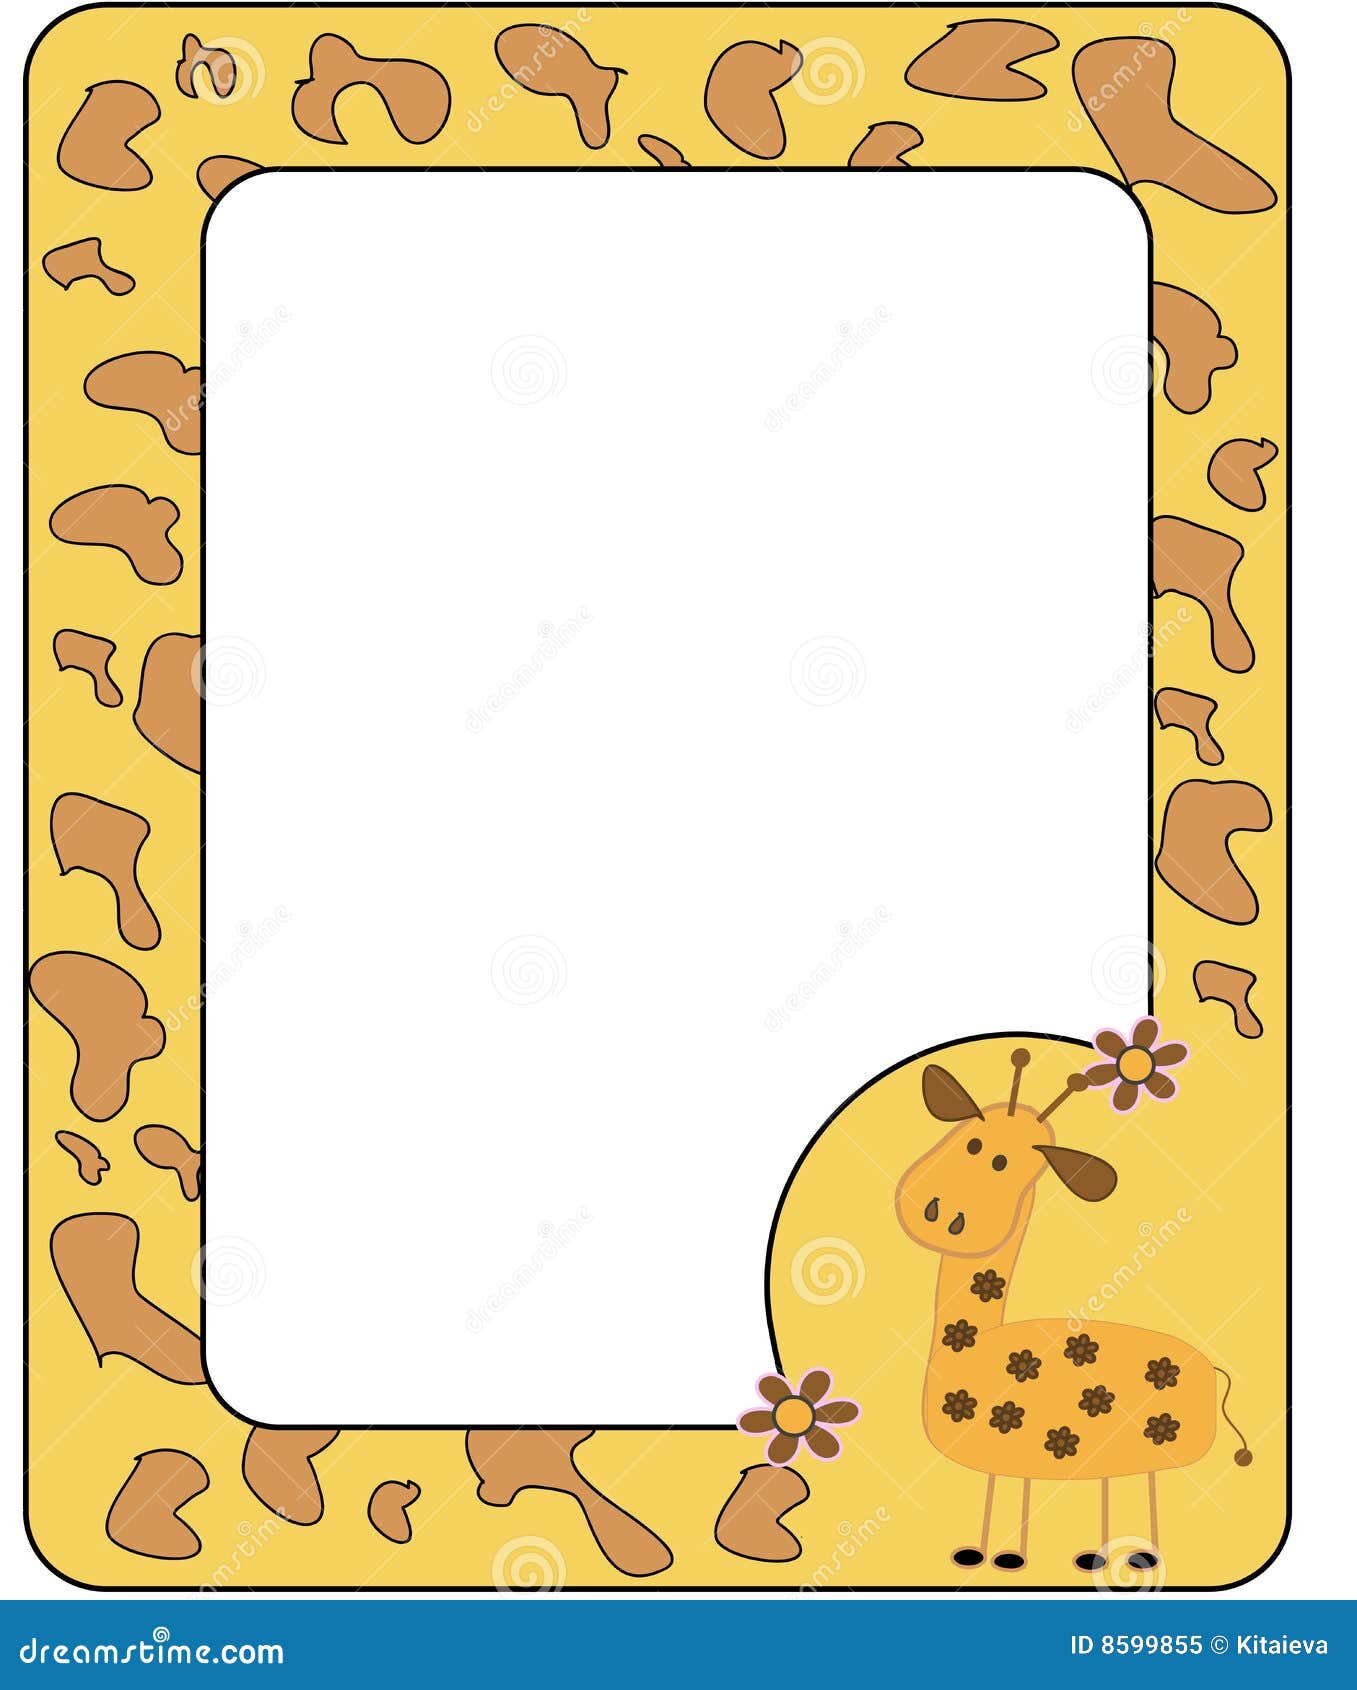 free giraffe border clipart - photo #27